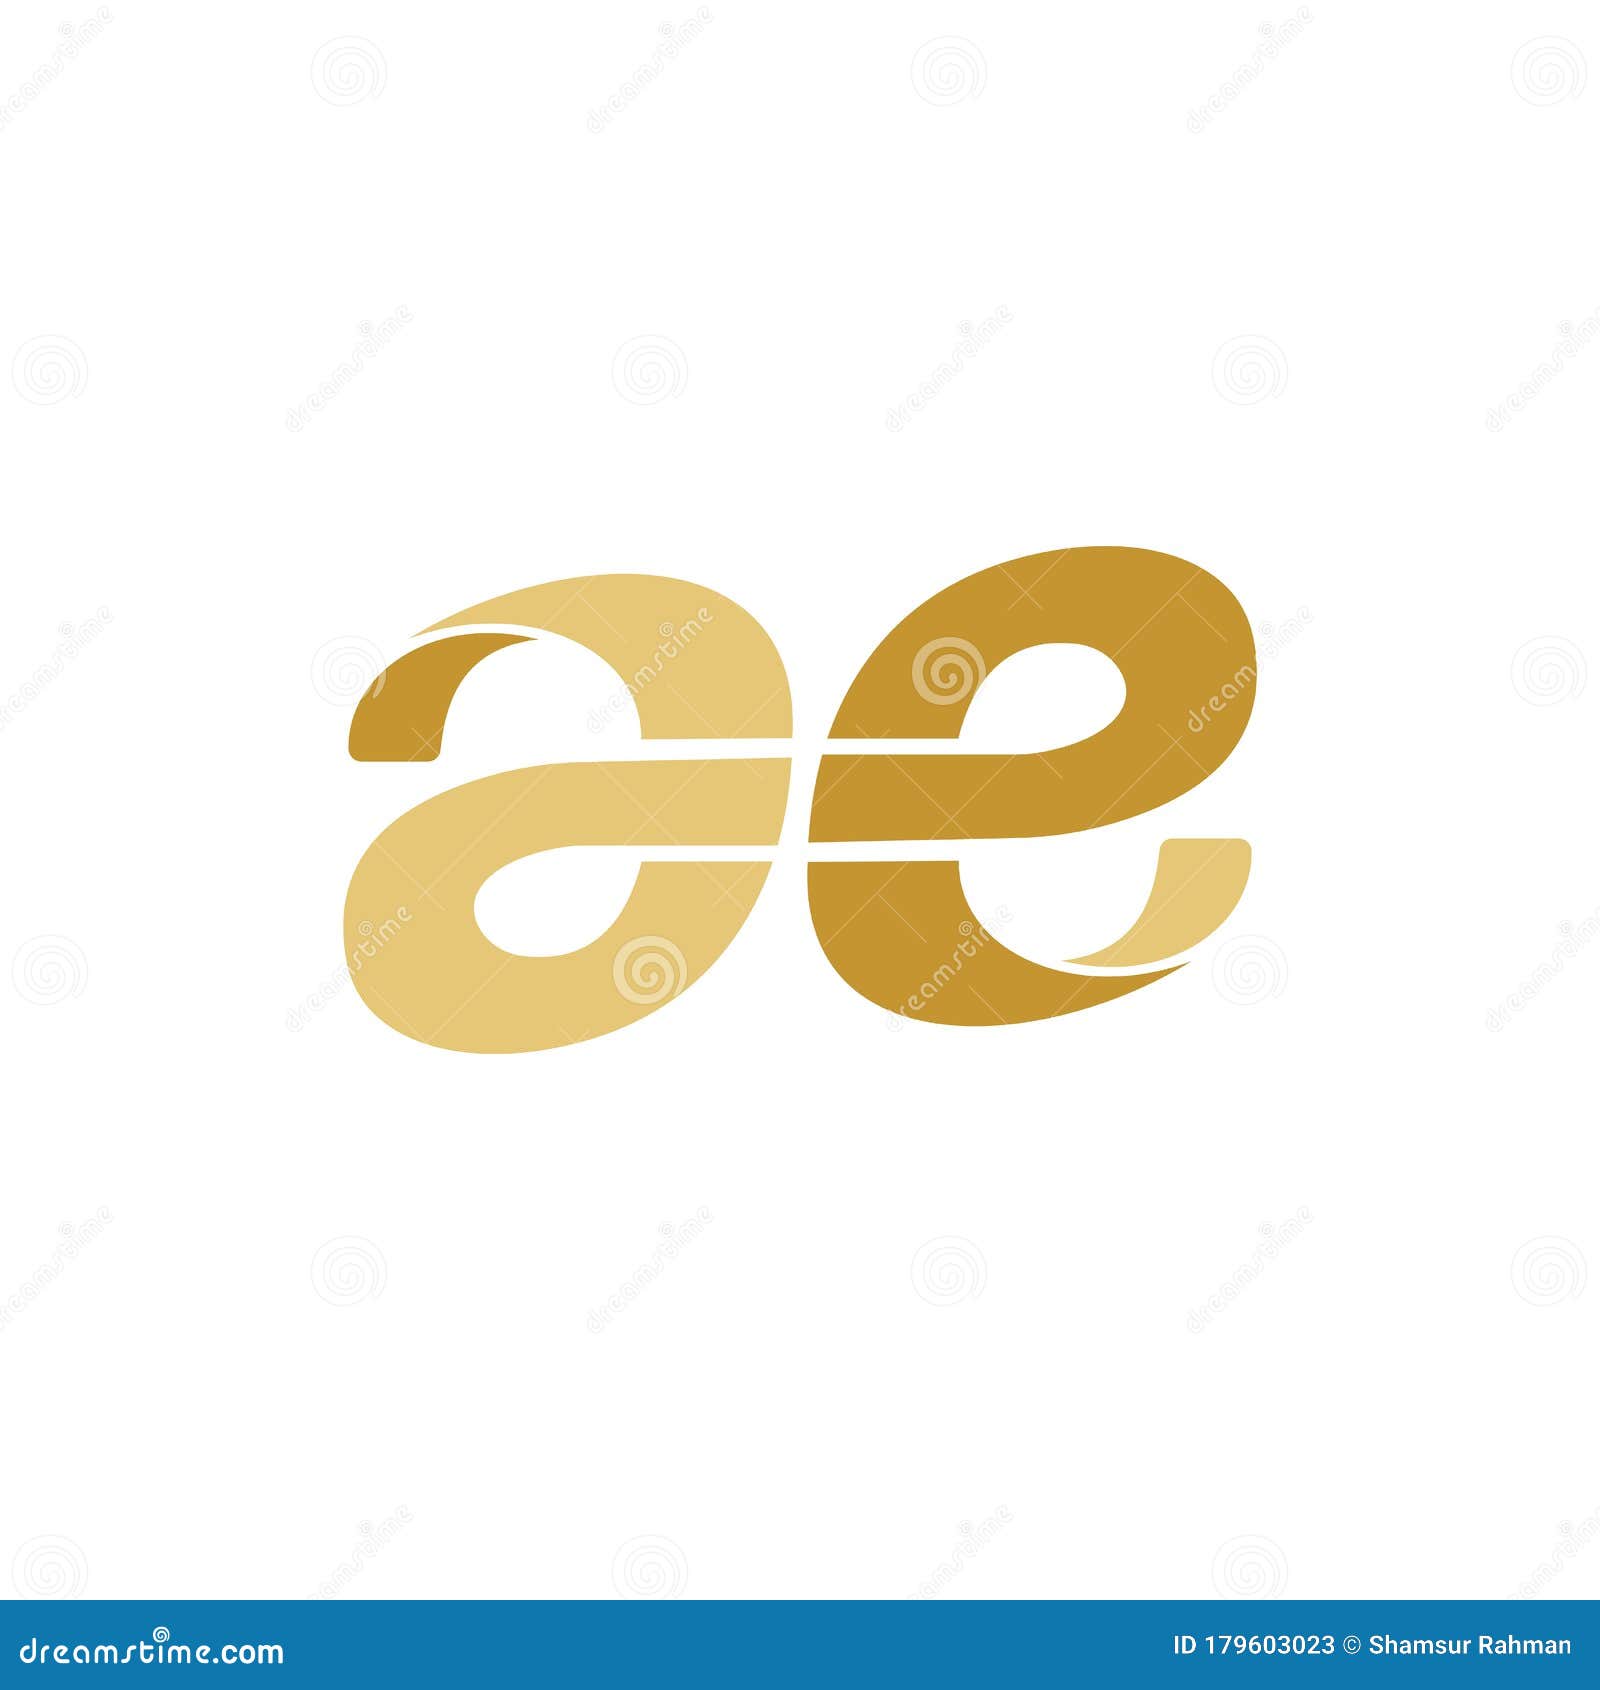 Initial Letter Ae Logo or Ea Logo Vector Design Template Stock ...